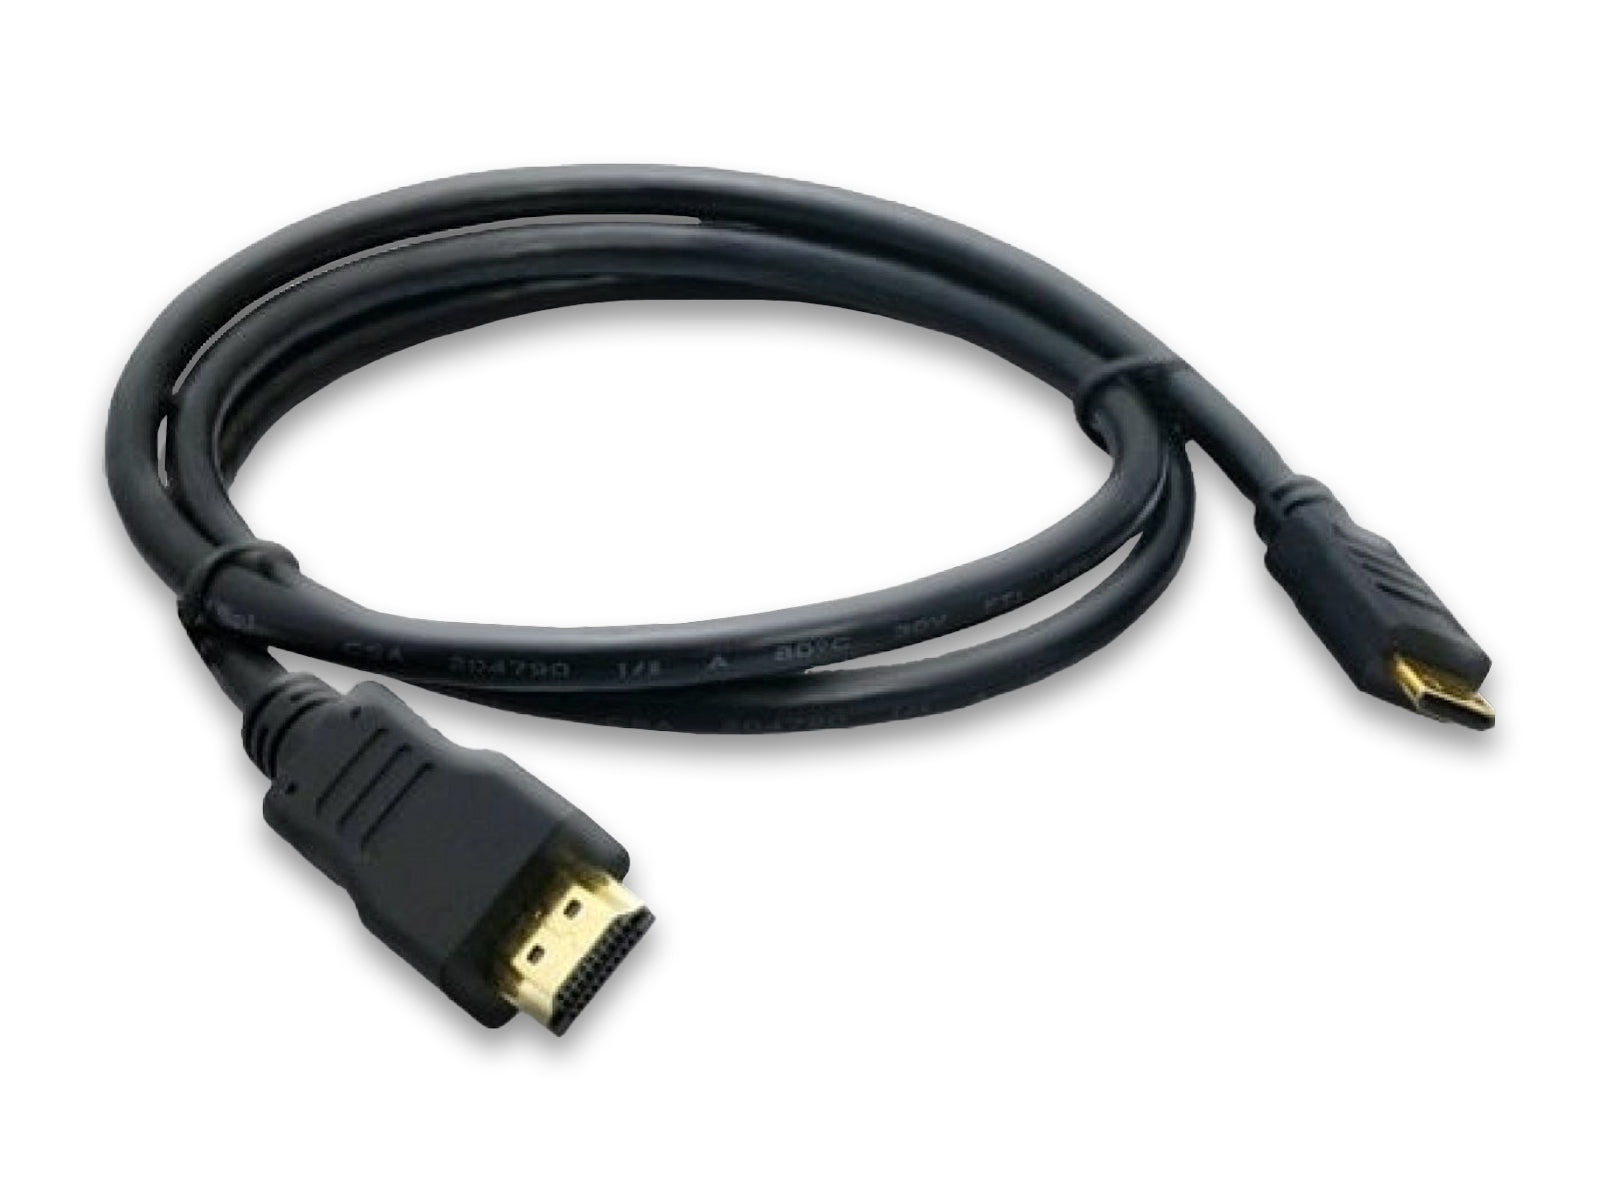 HDMI cable 1.4 